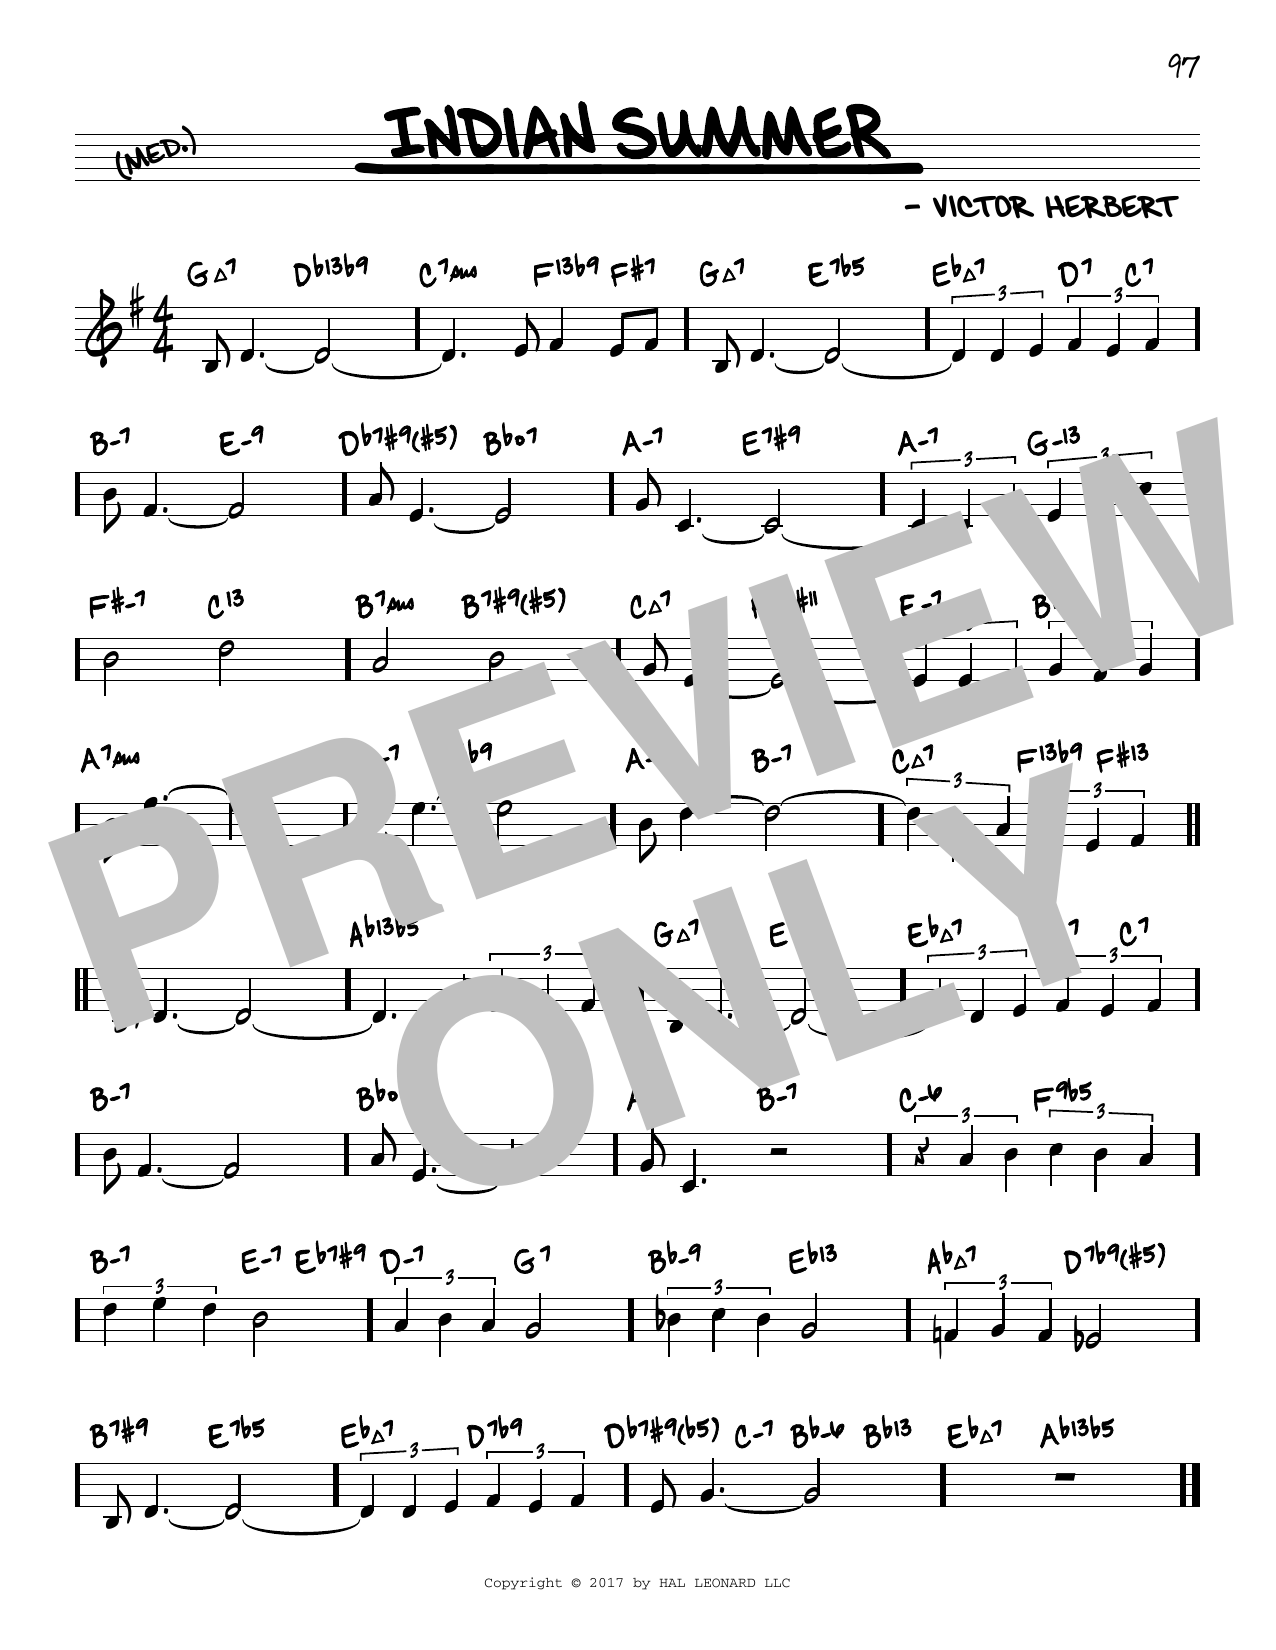 Victor Herbert Indian Summer (arr. David Hazeltine) Sheet Music Notes & Chords for Real Book – Enhanced Chords - Download or Print PDF